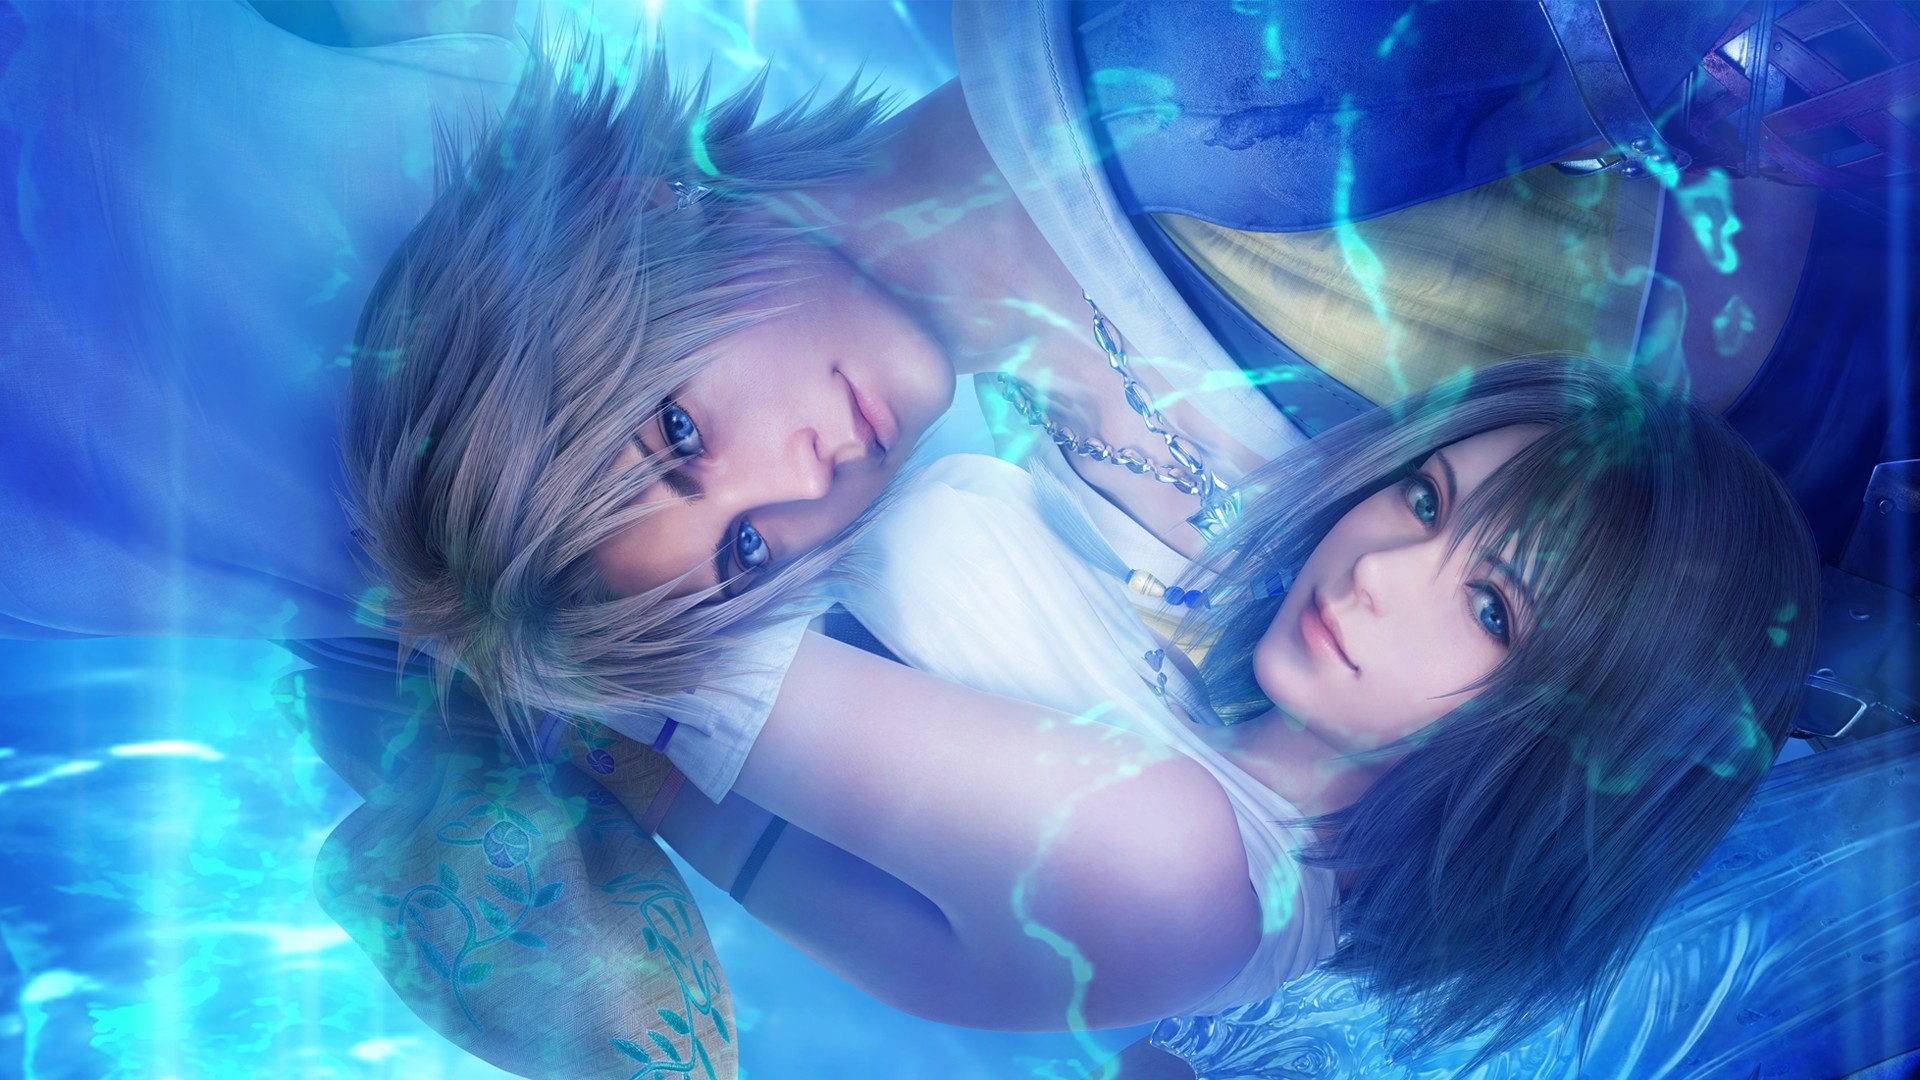 Final Fantasy X/X-2 HD Remaster